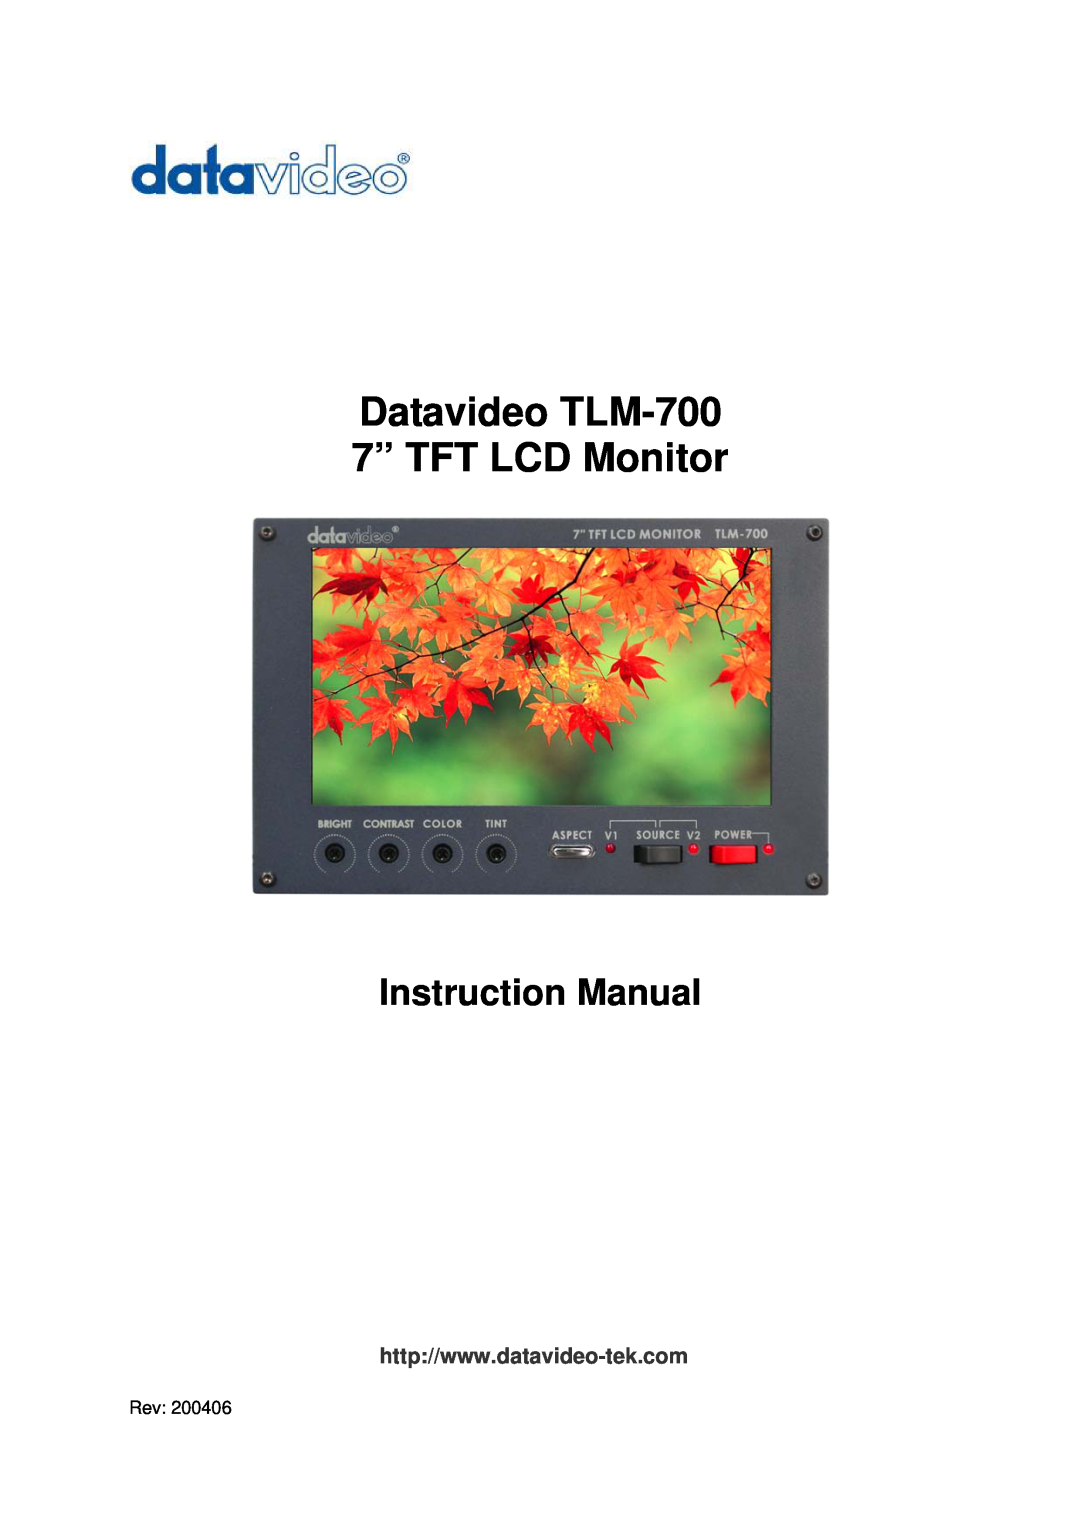 Datavideo instruction manual Datavideo TLM-700 7” TFT LCD Monitor, Instruction Manual 